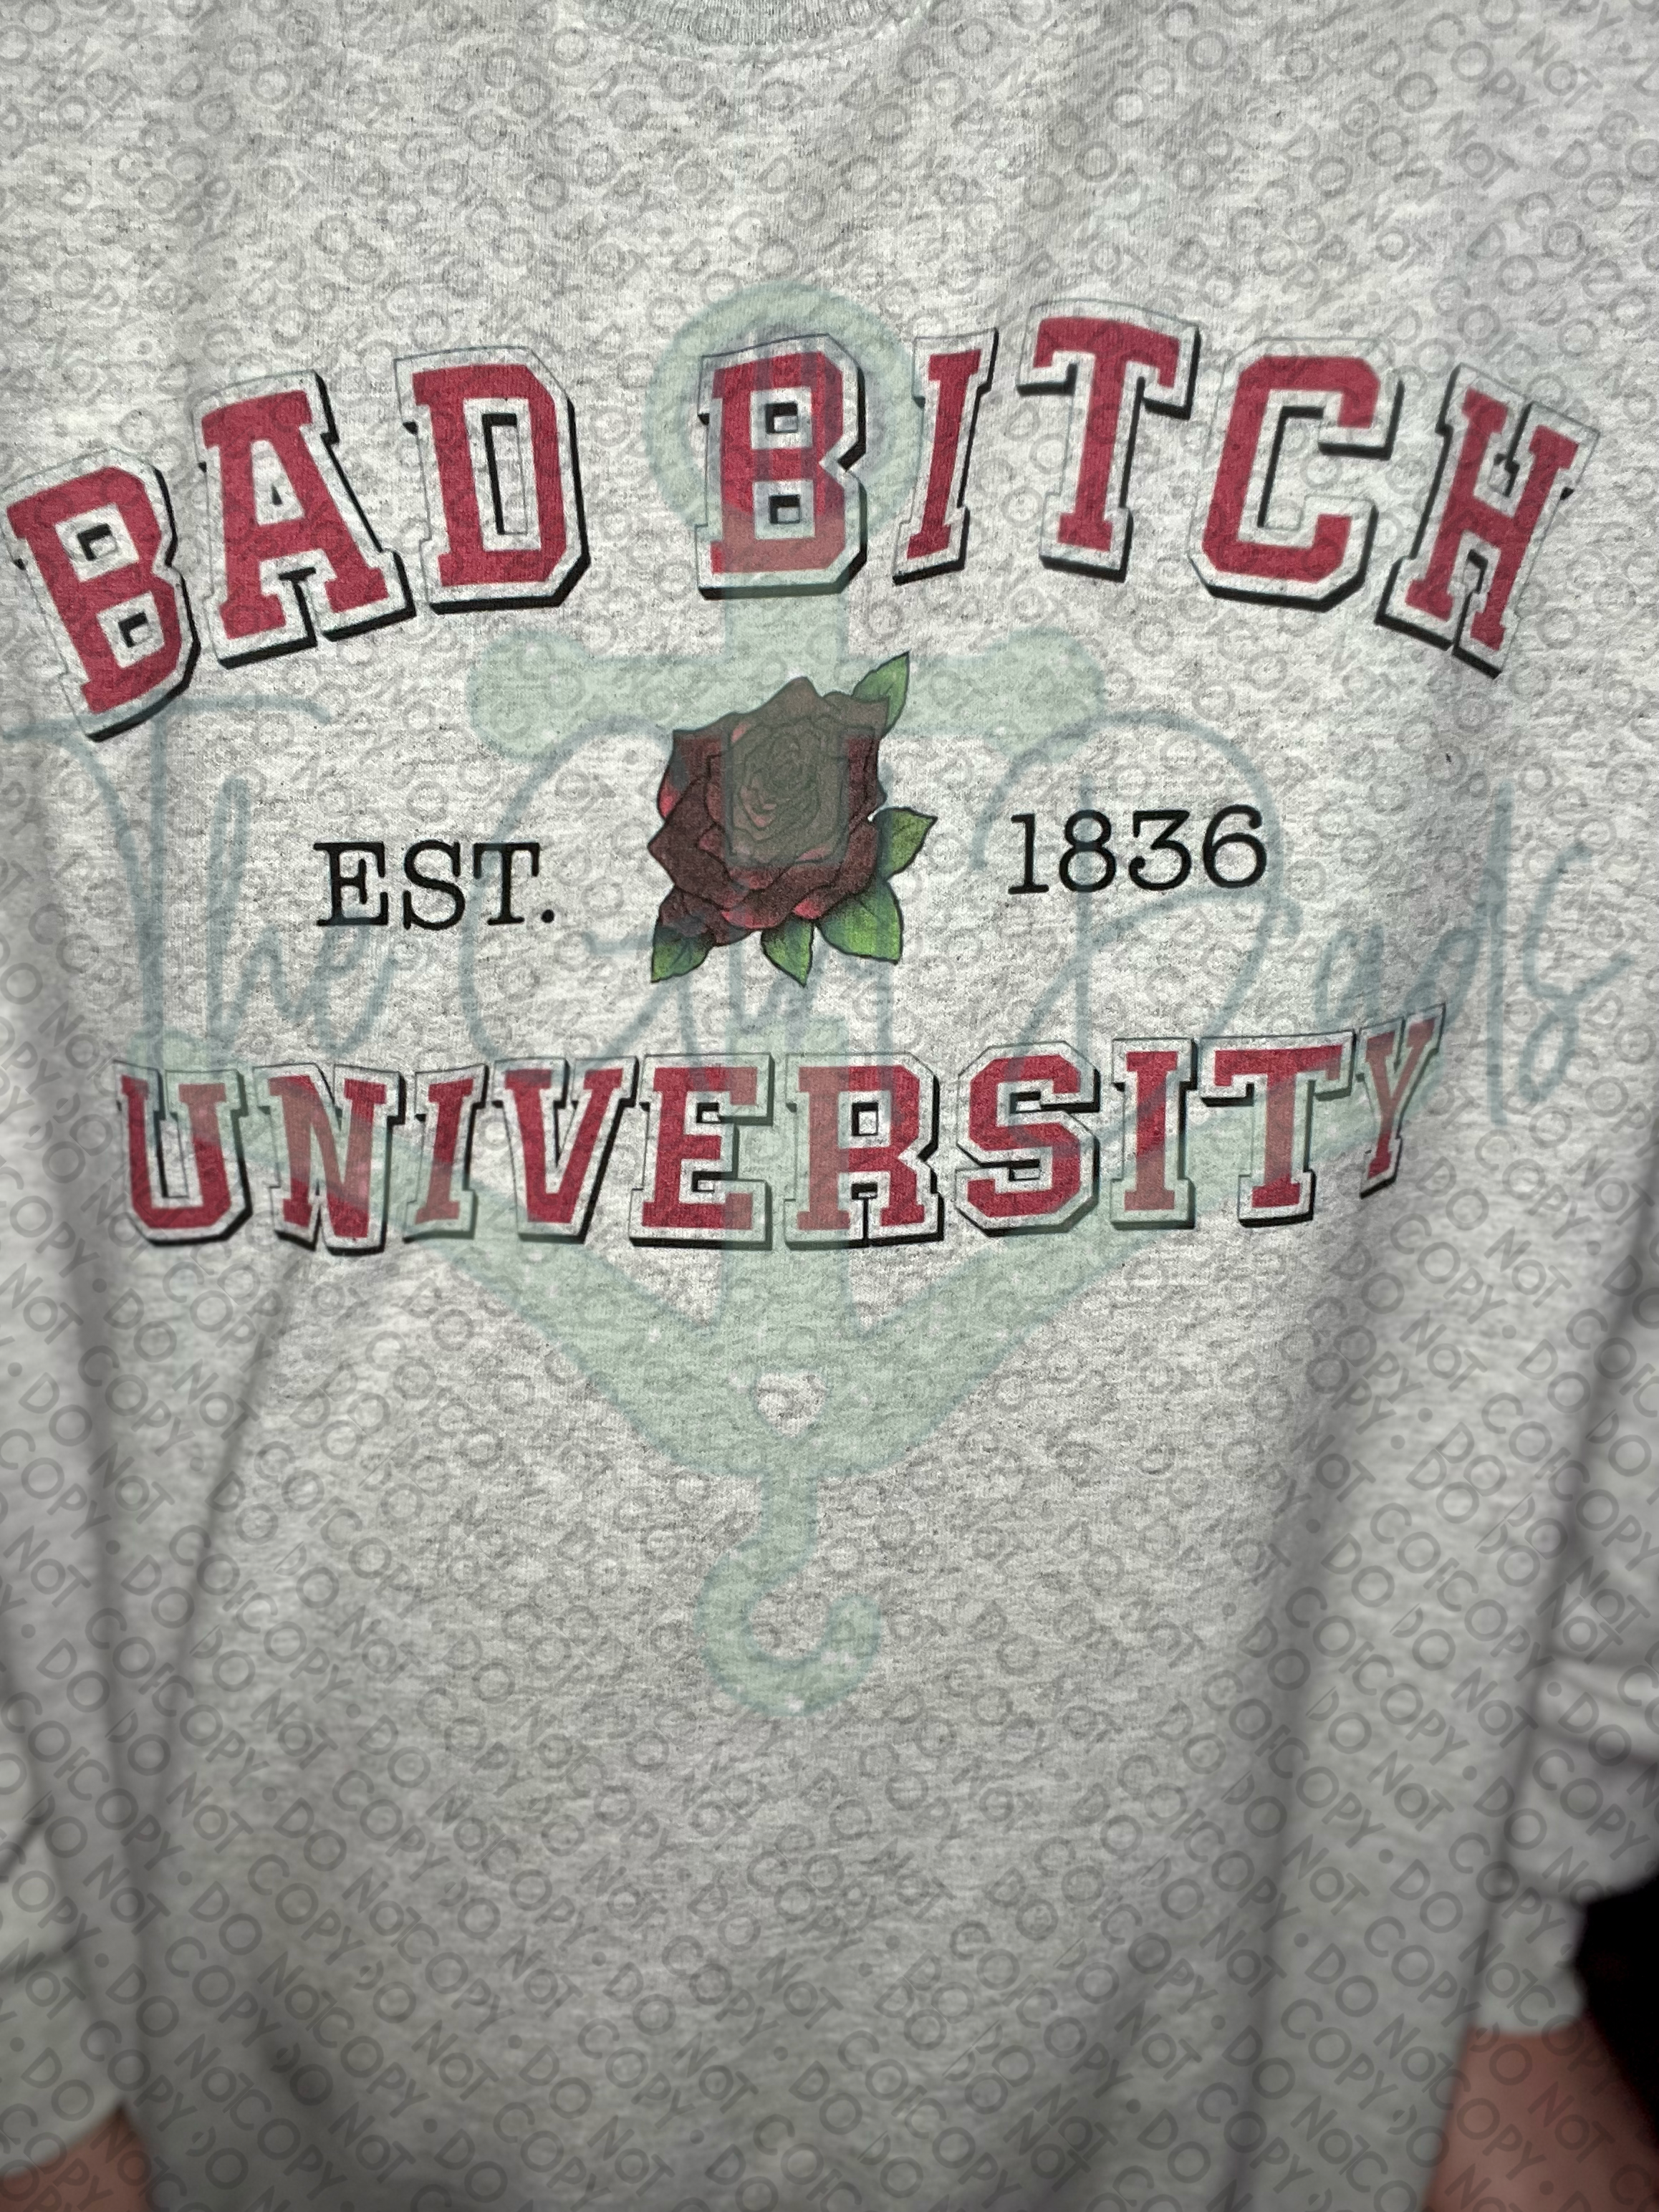 Bad Bitch University Top Design